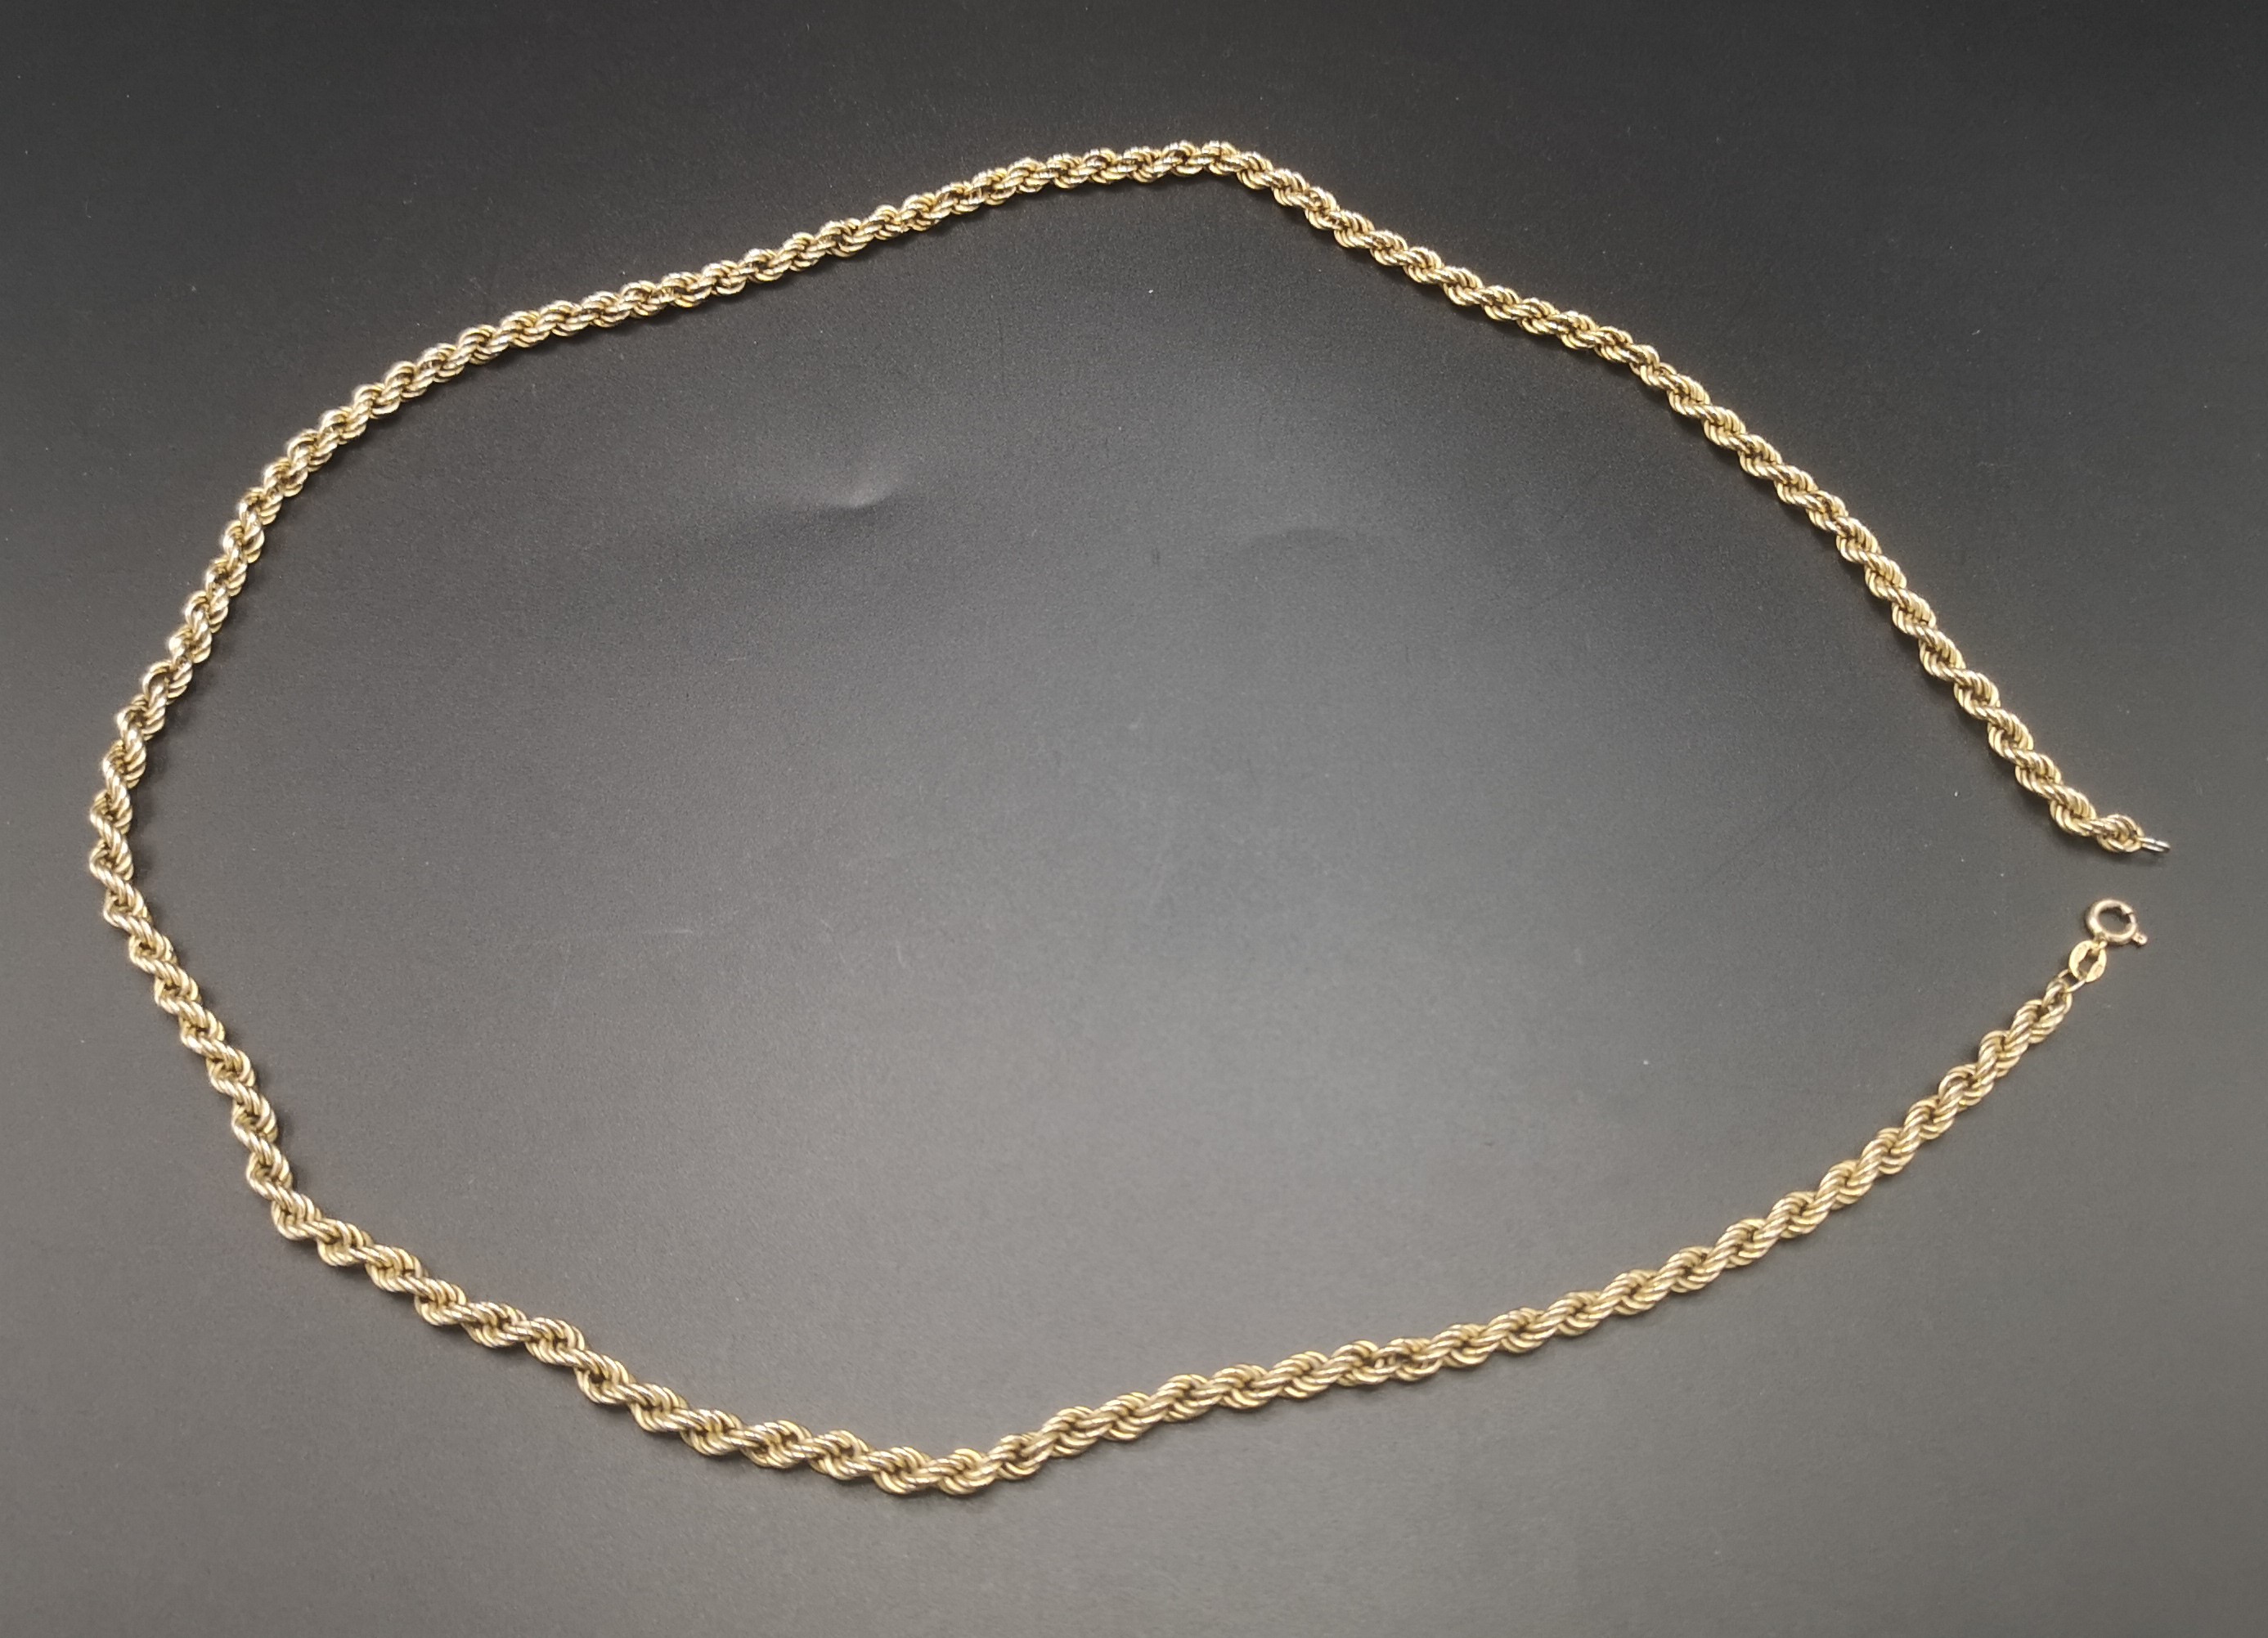 9ct gold rope twist chain